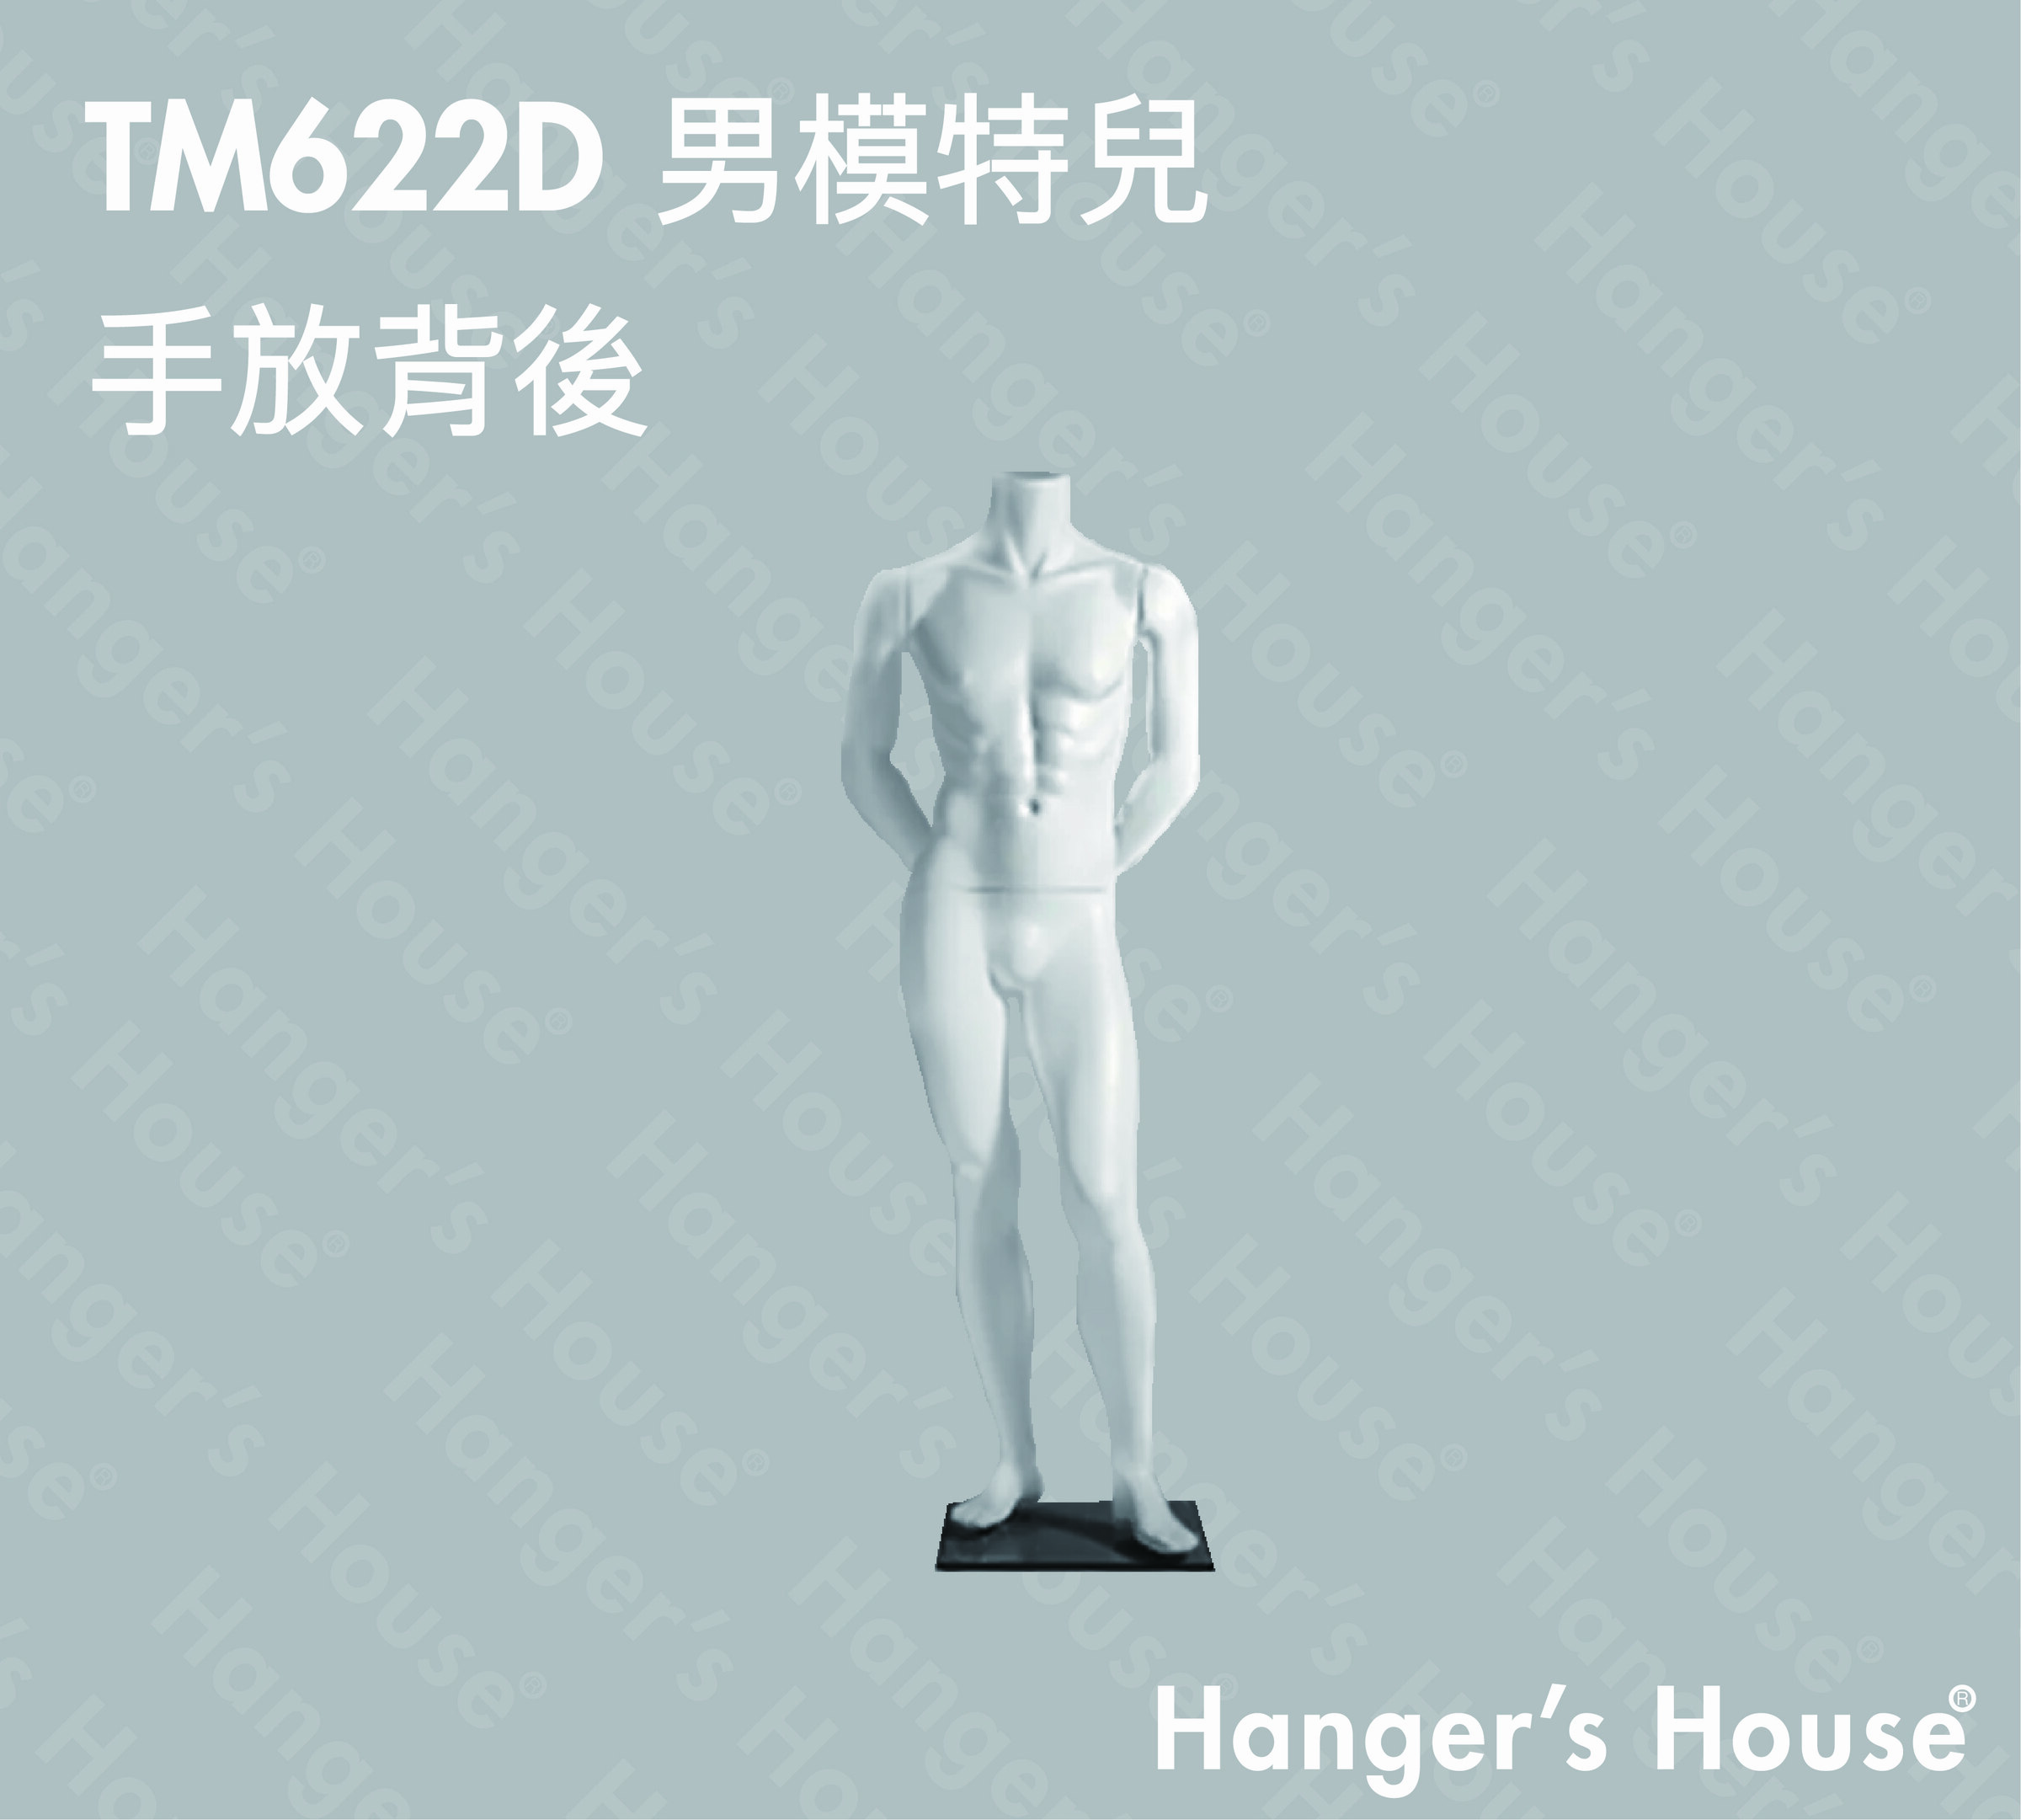 TM622D 男模特兒 手放背後-01.jpg